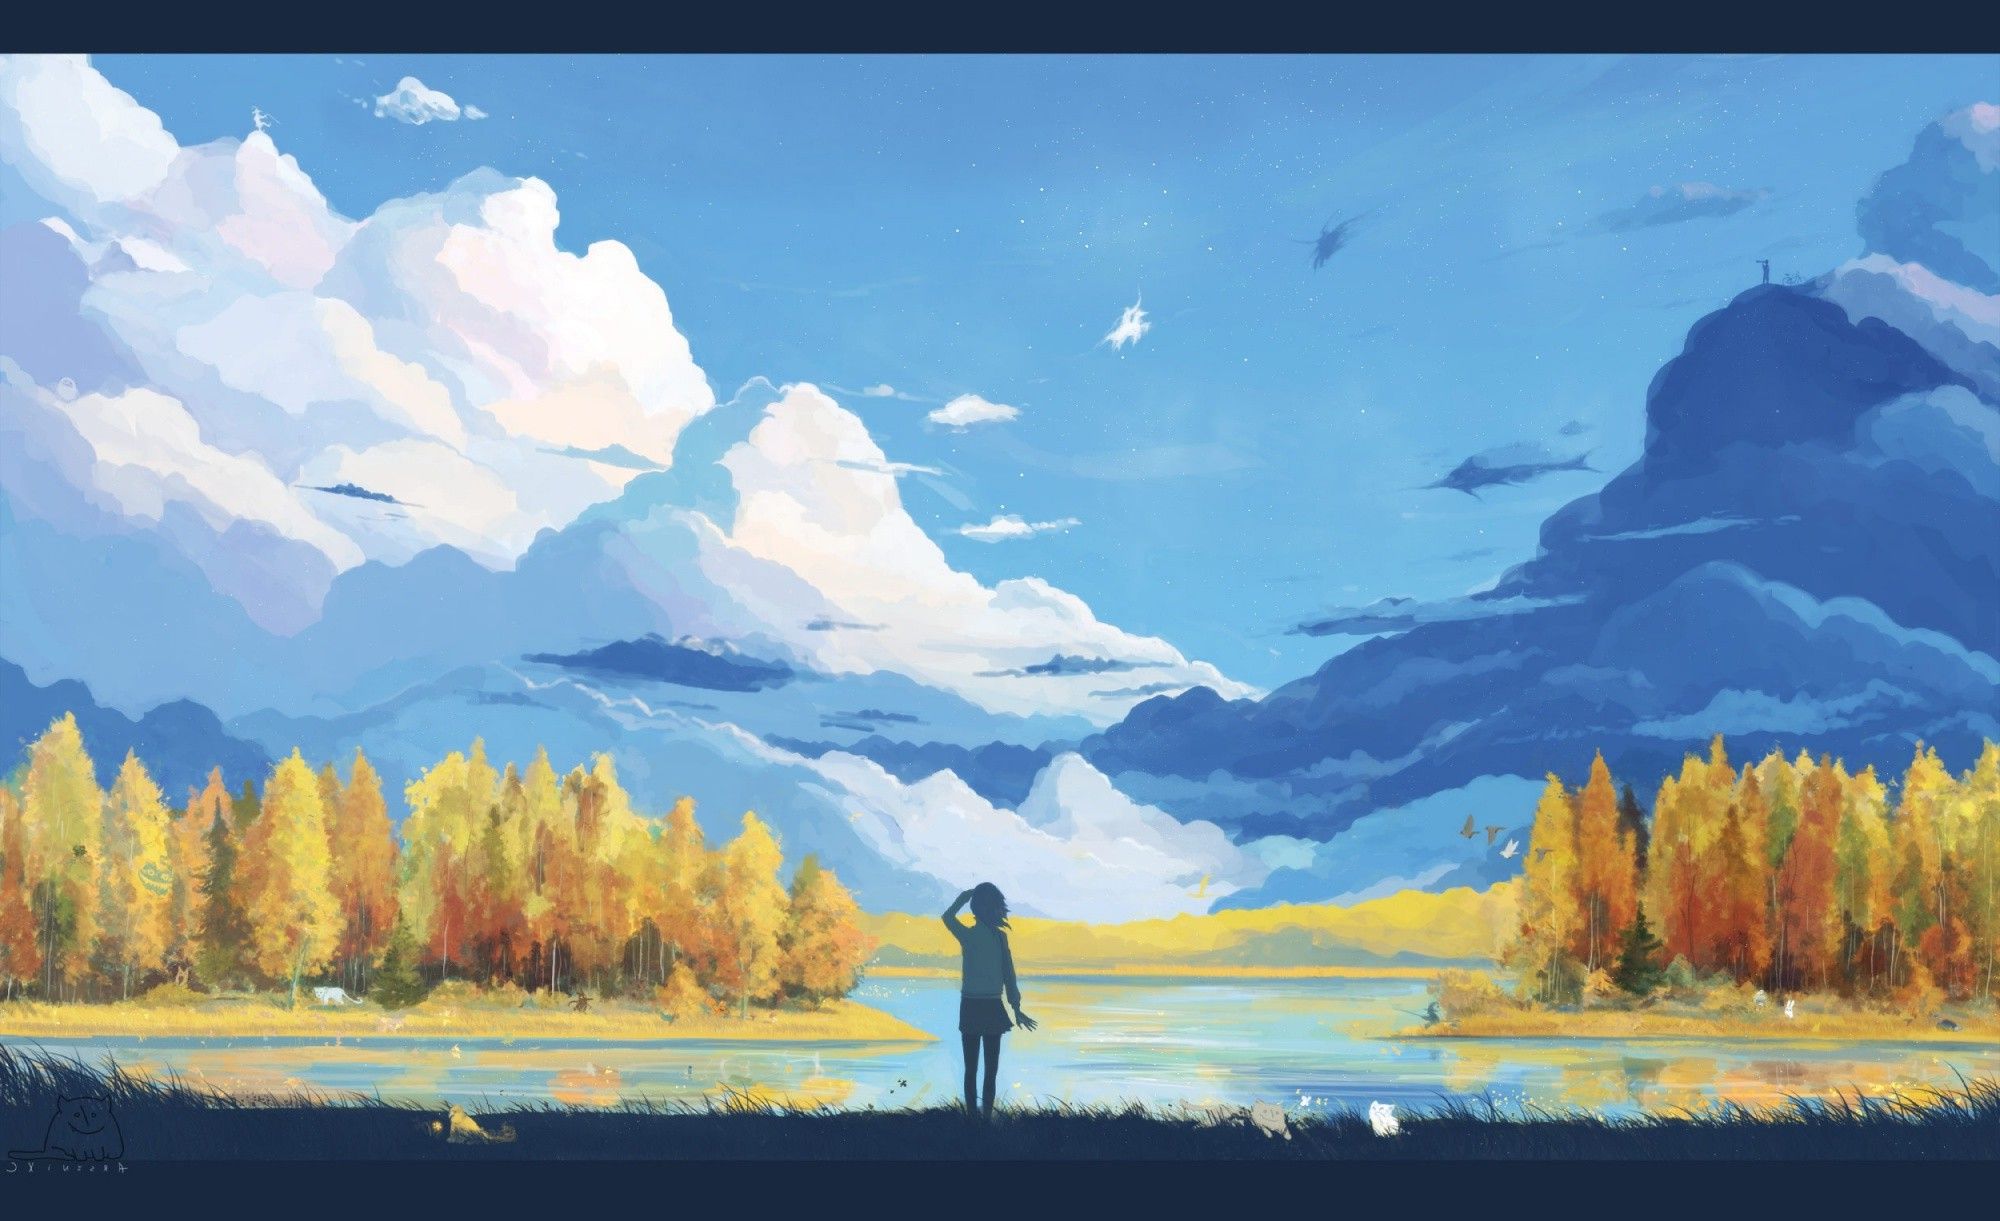 Anime background, Anime scenery, Fantasy landscape